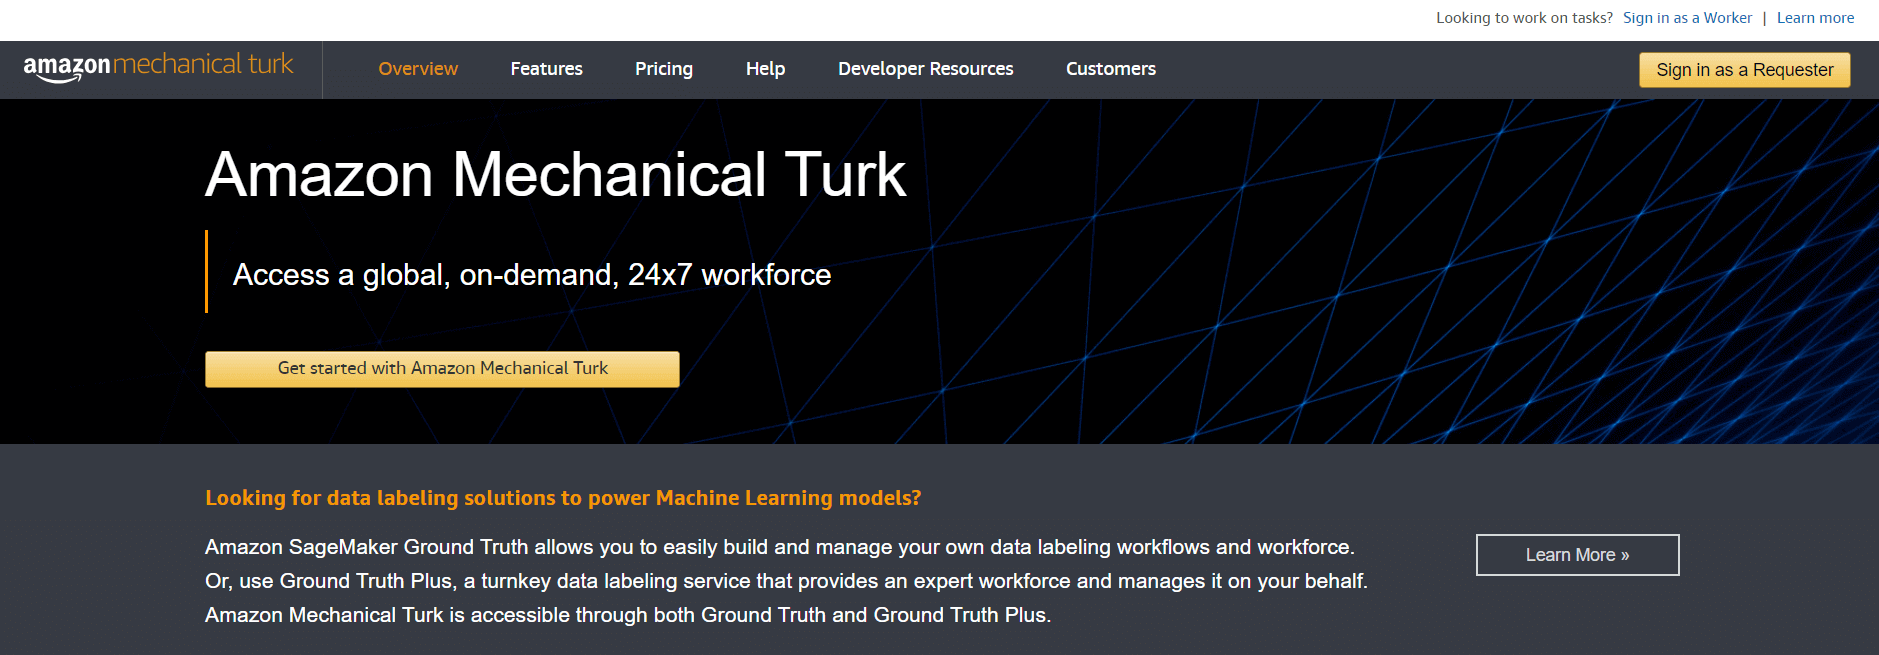 Best Jobs - Amazon Mechanical Turk